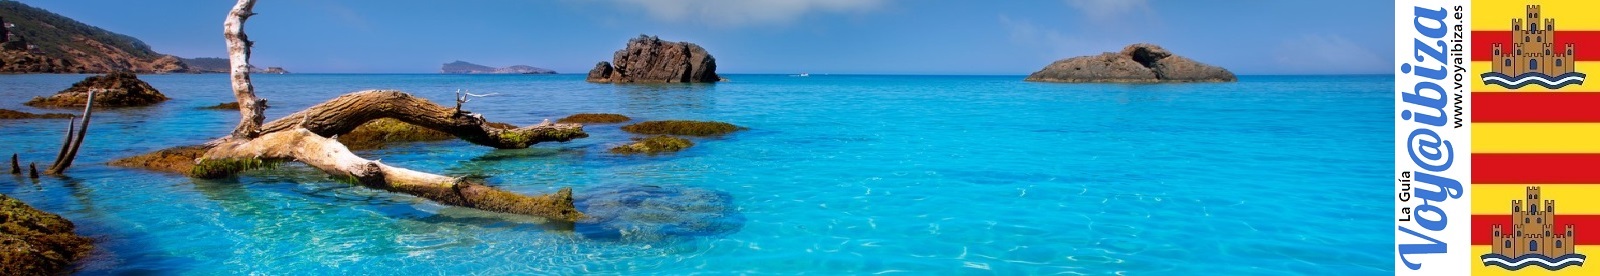 Playas de Ibiza (Eivissa): Aigues Blanques